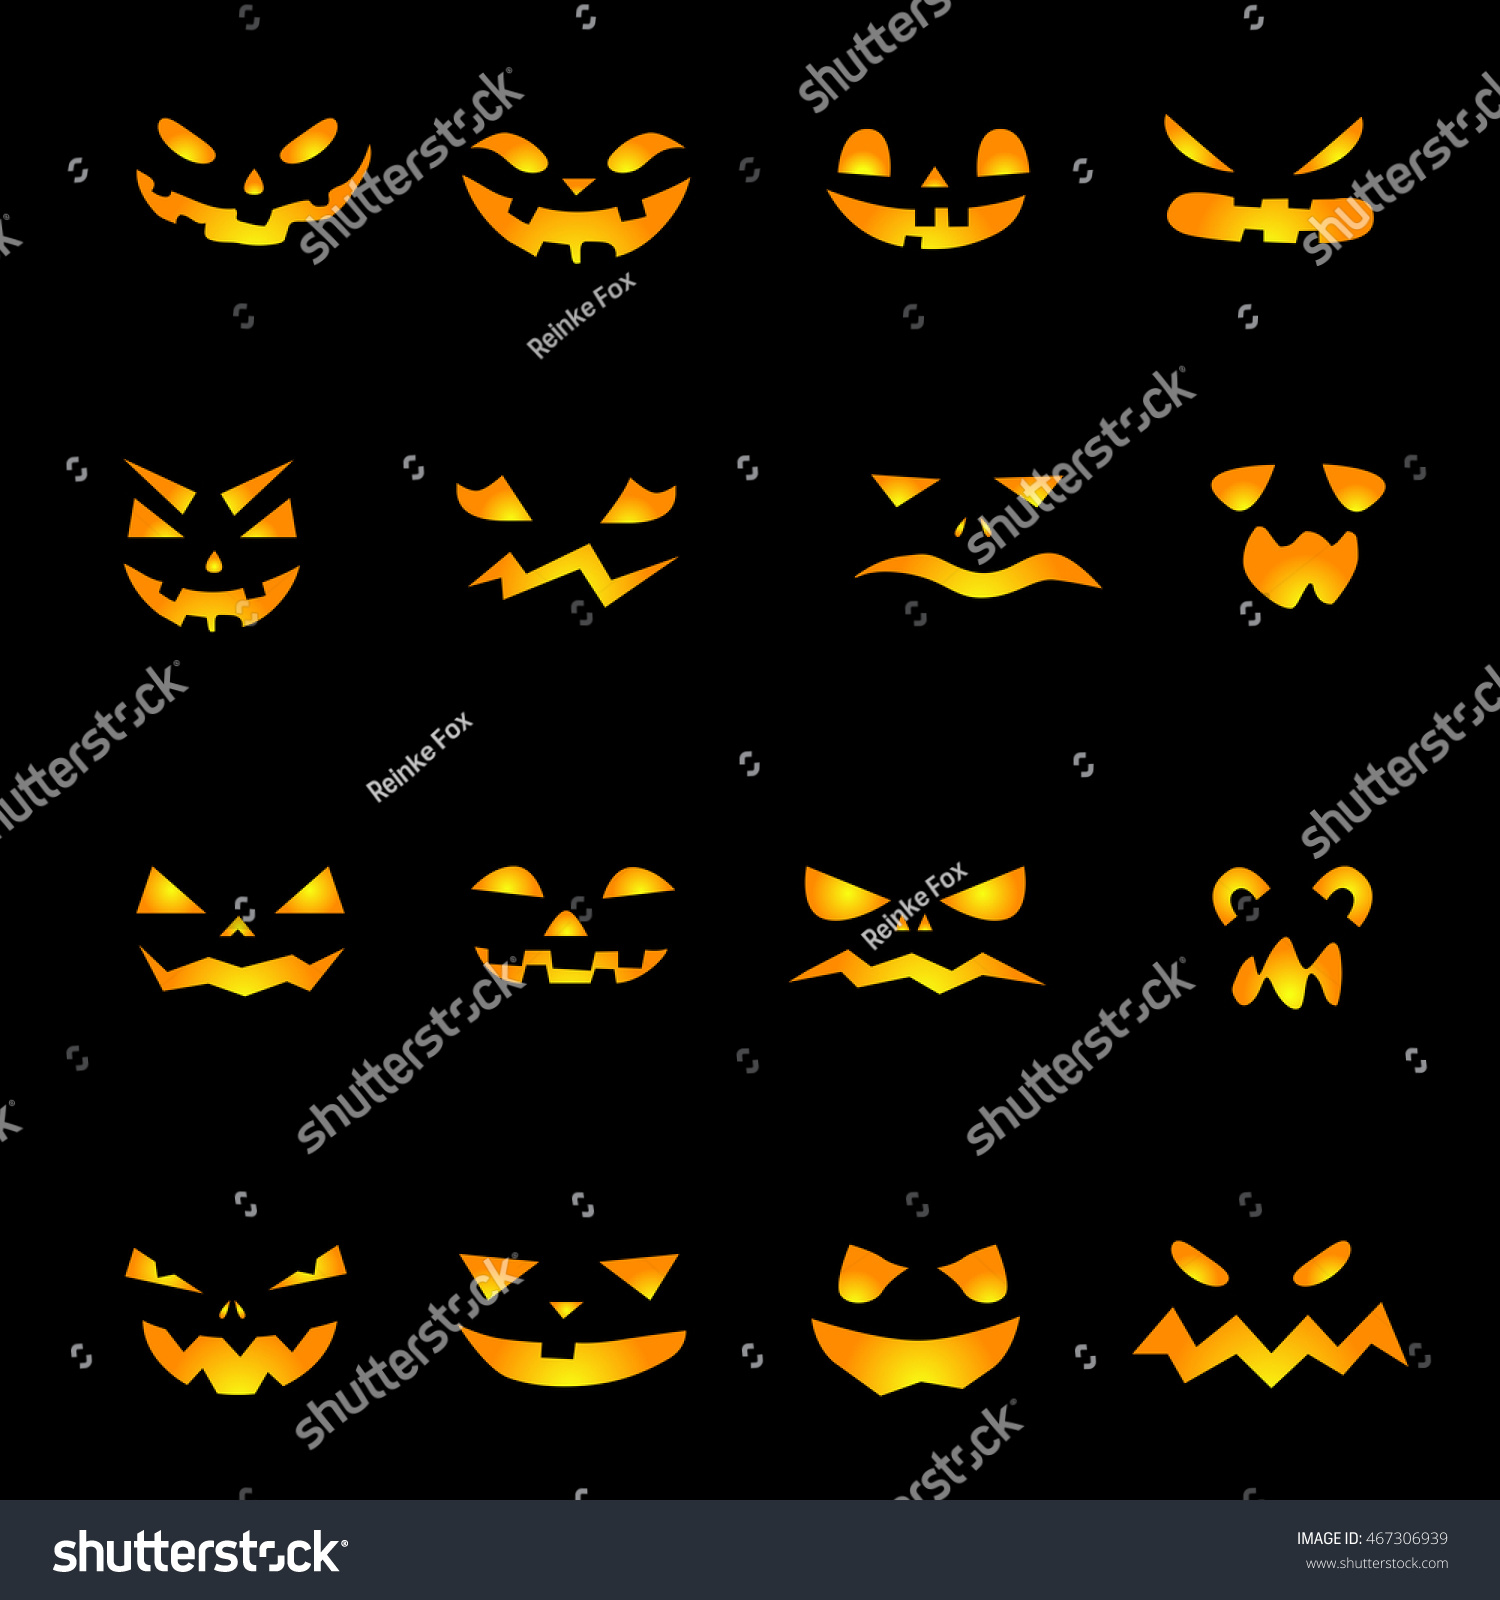 Halloween Set Pumpkins Scary Faces Stock Vector 467306939 - Shutterstock